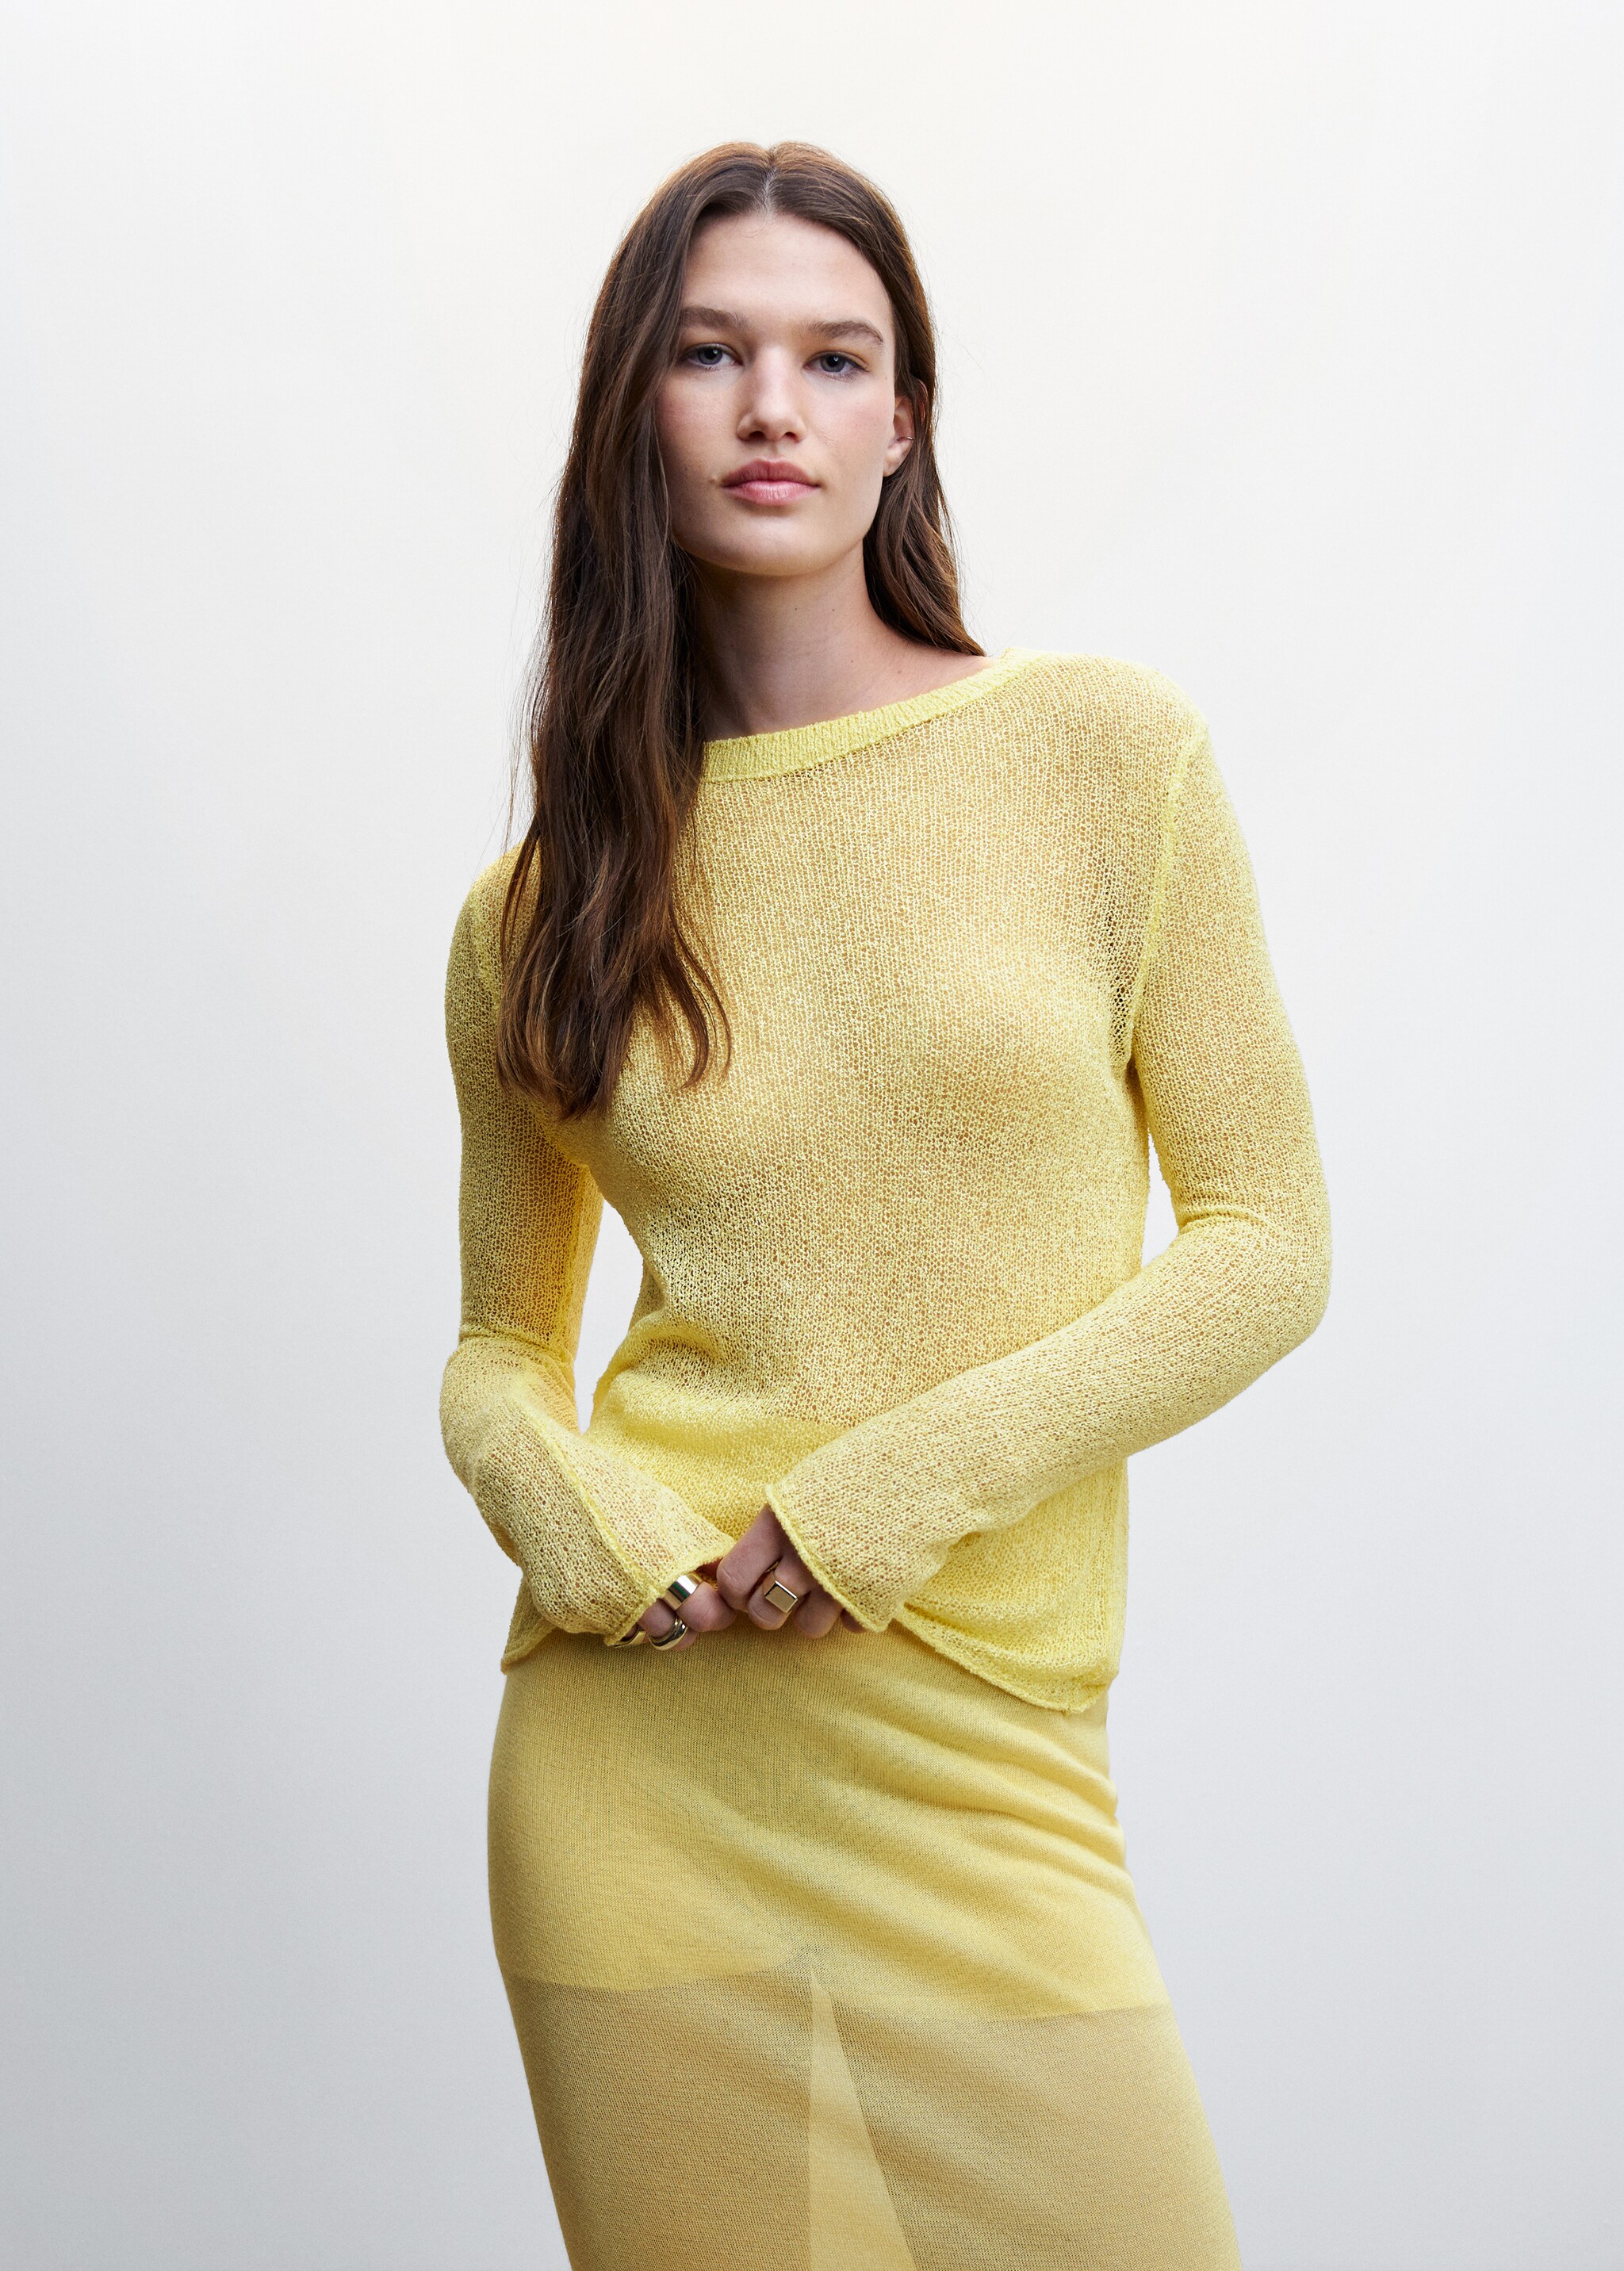 Semi-transparent knitted sweater - Medium plane